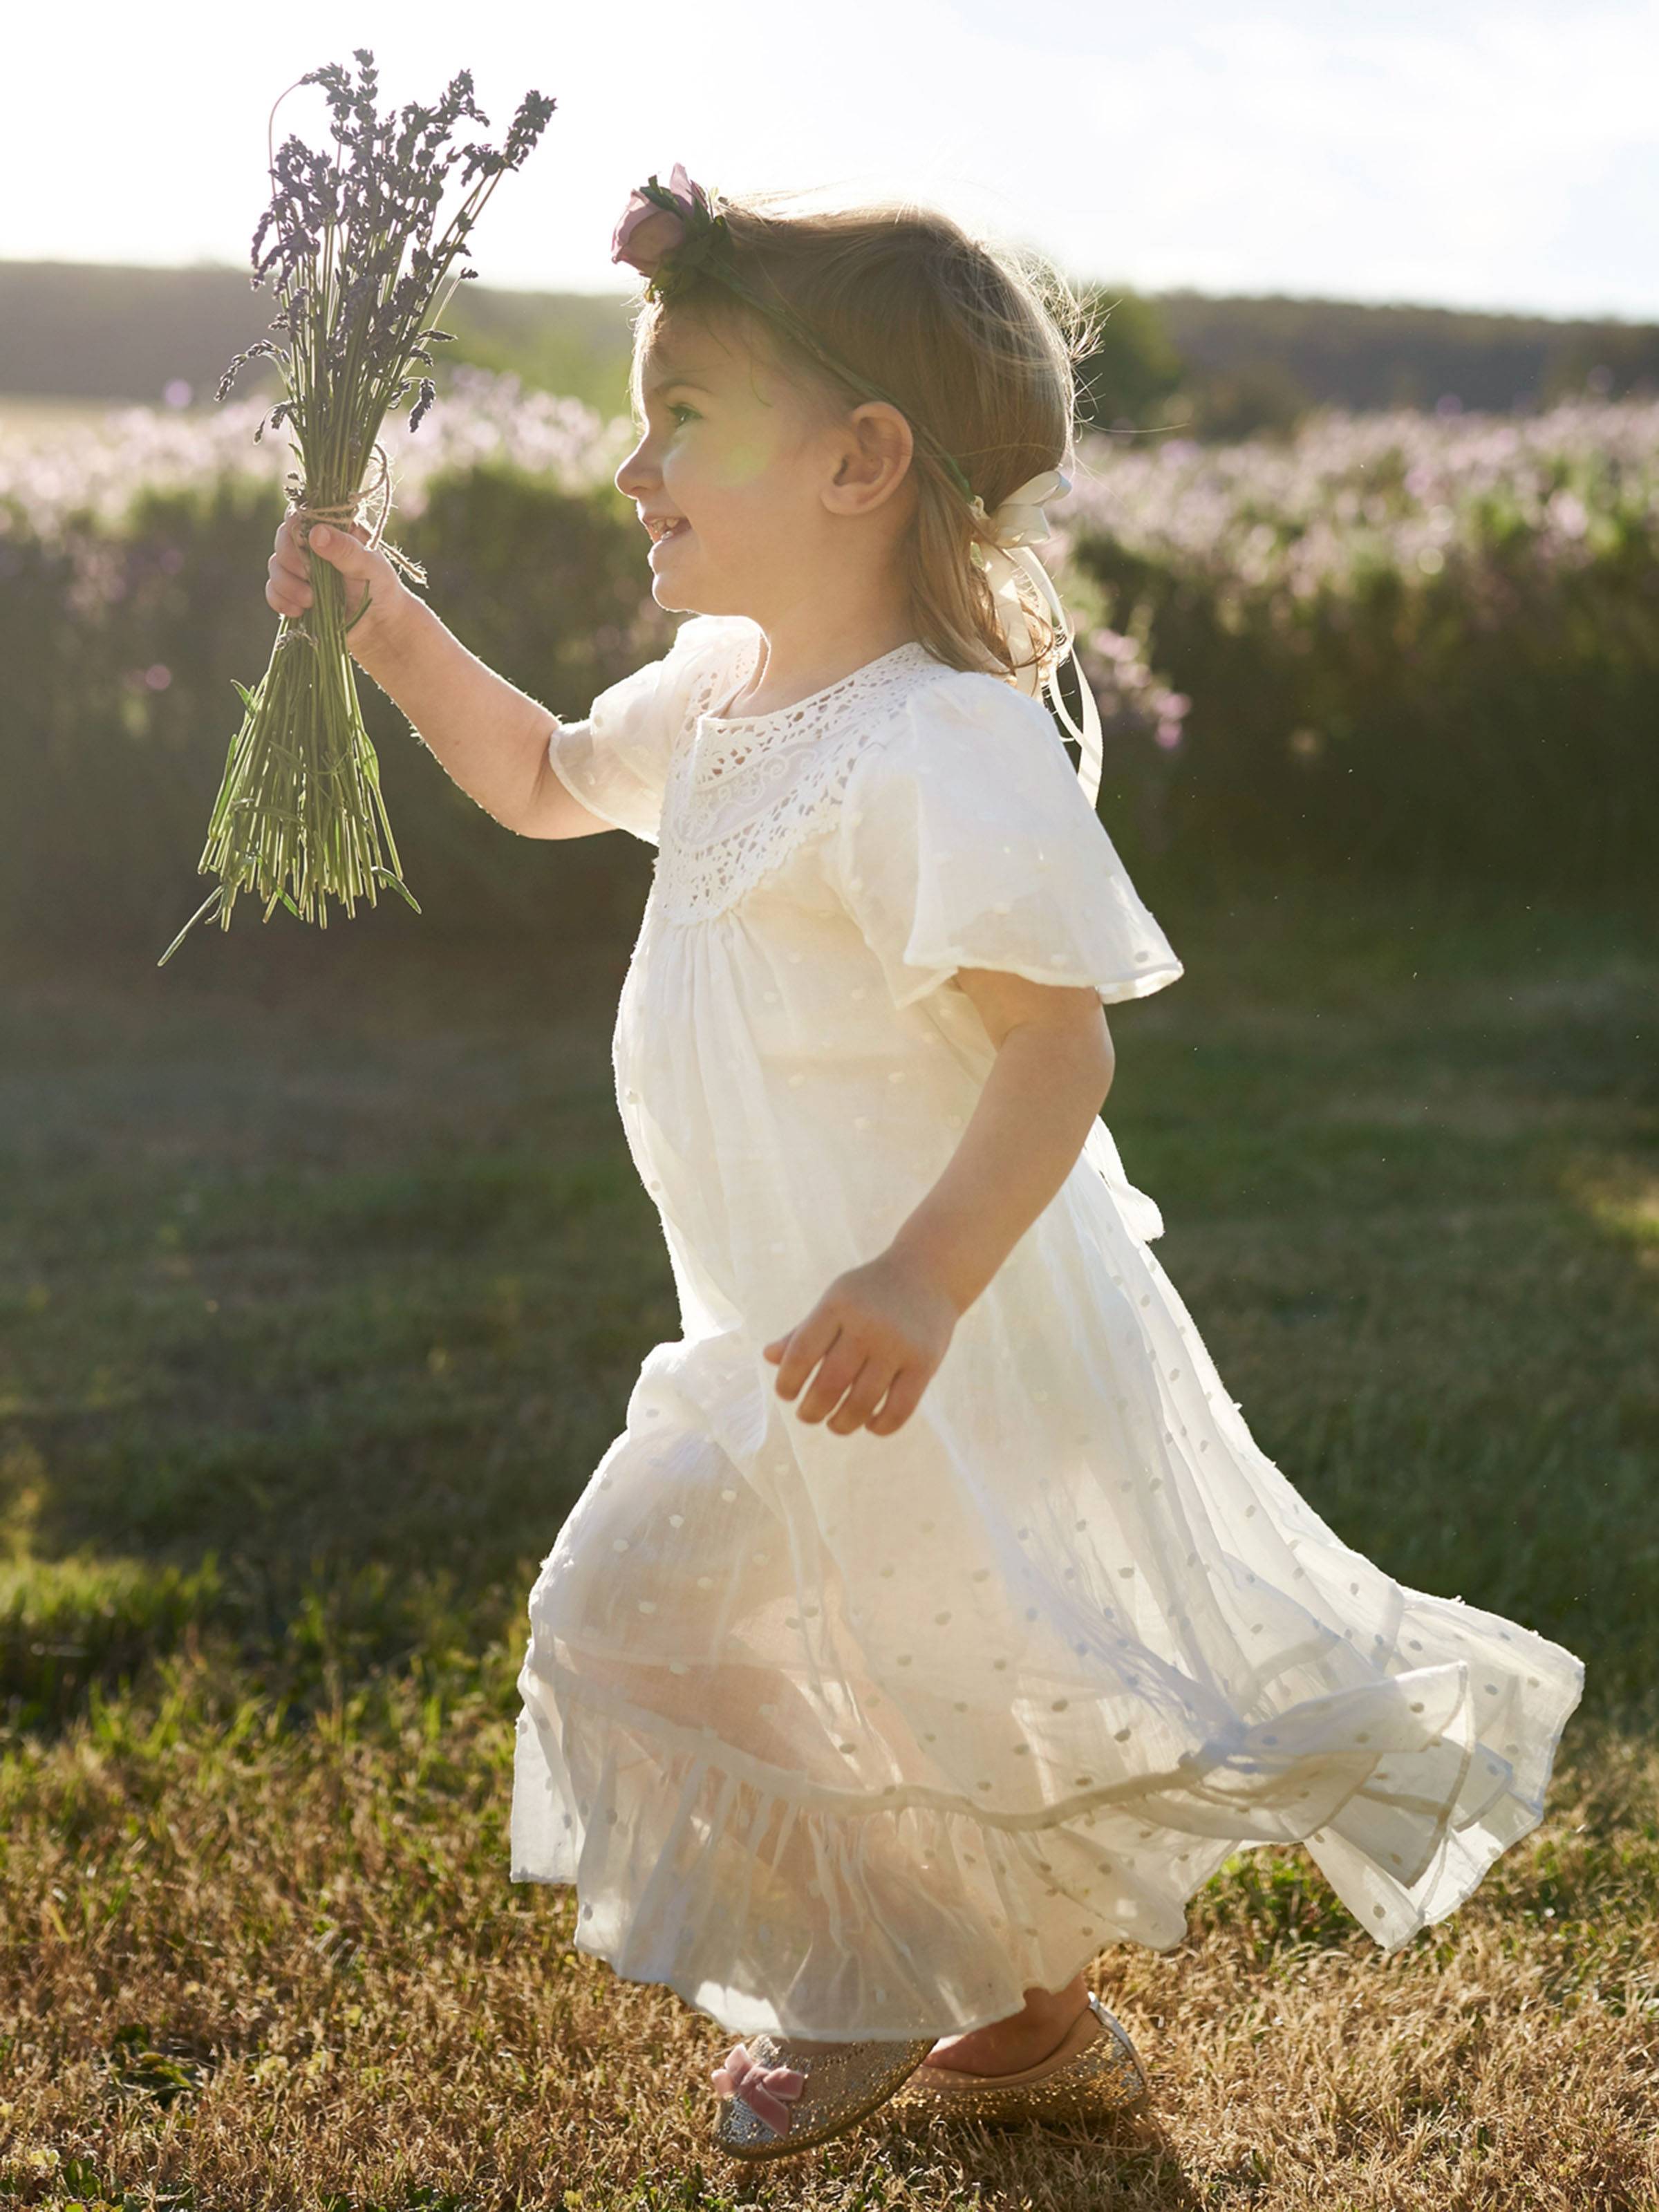 Flower girl running through a lavender field